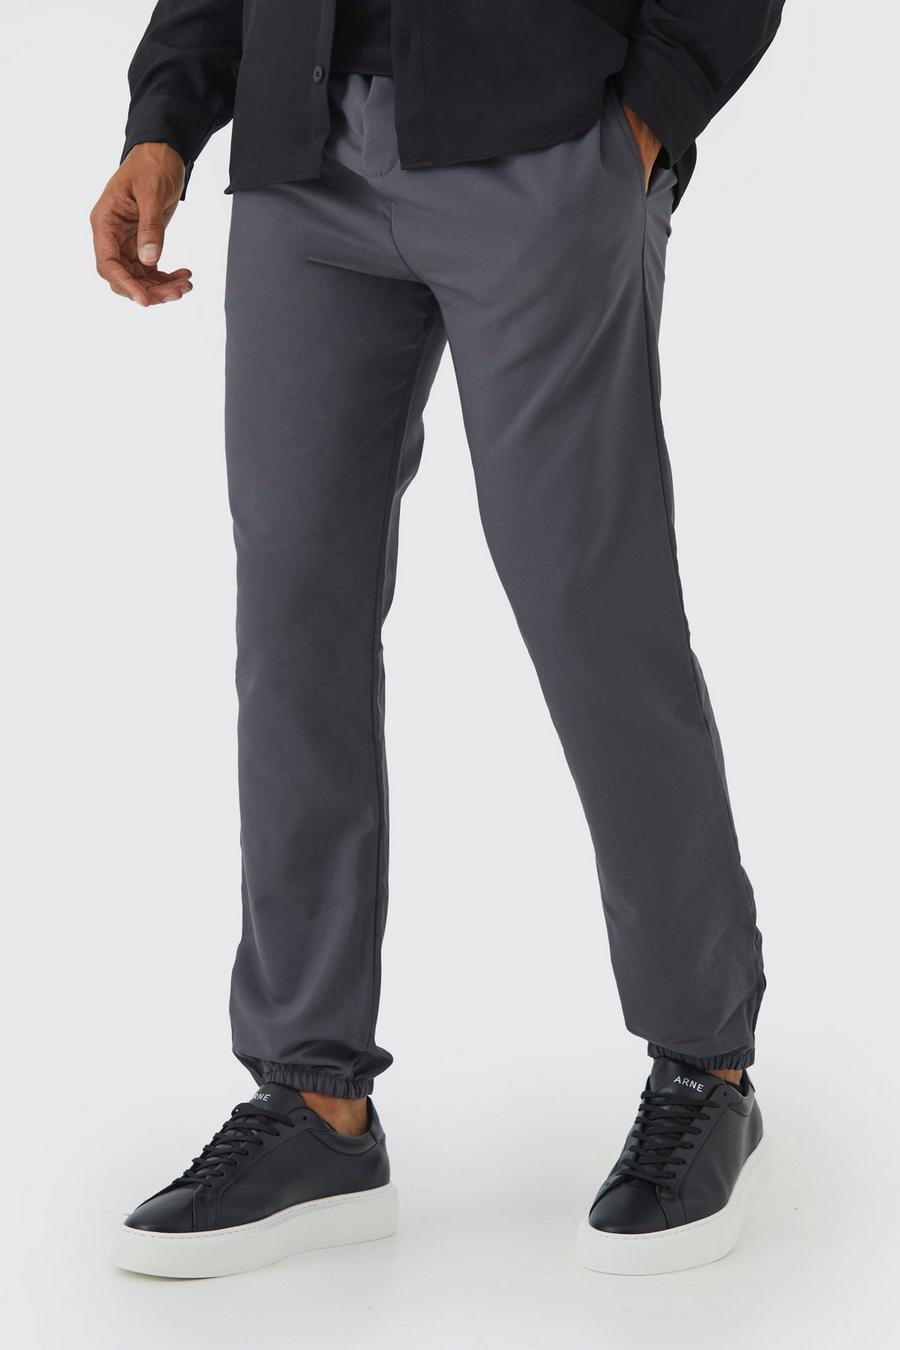 Pantaloni Slim Fit in Stretch tecnico, Charcoal gris